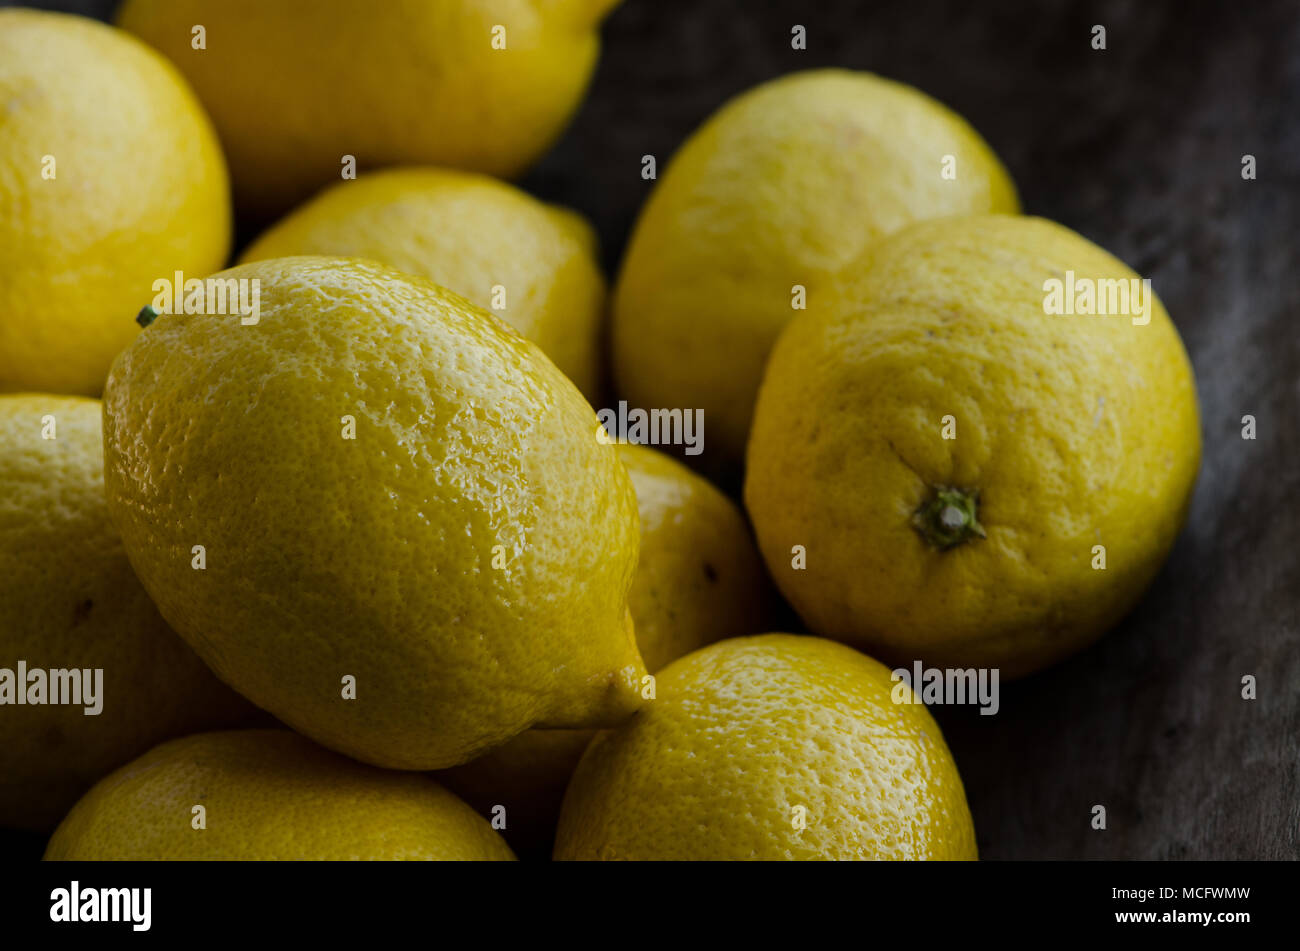 Group of lemons on the dark wooden surface Stock Photo